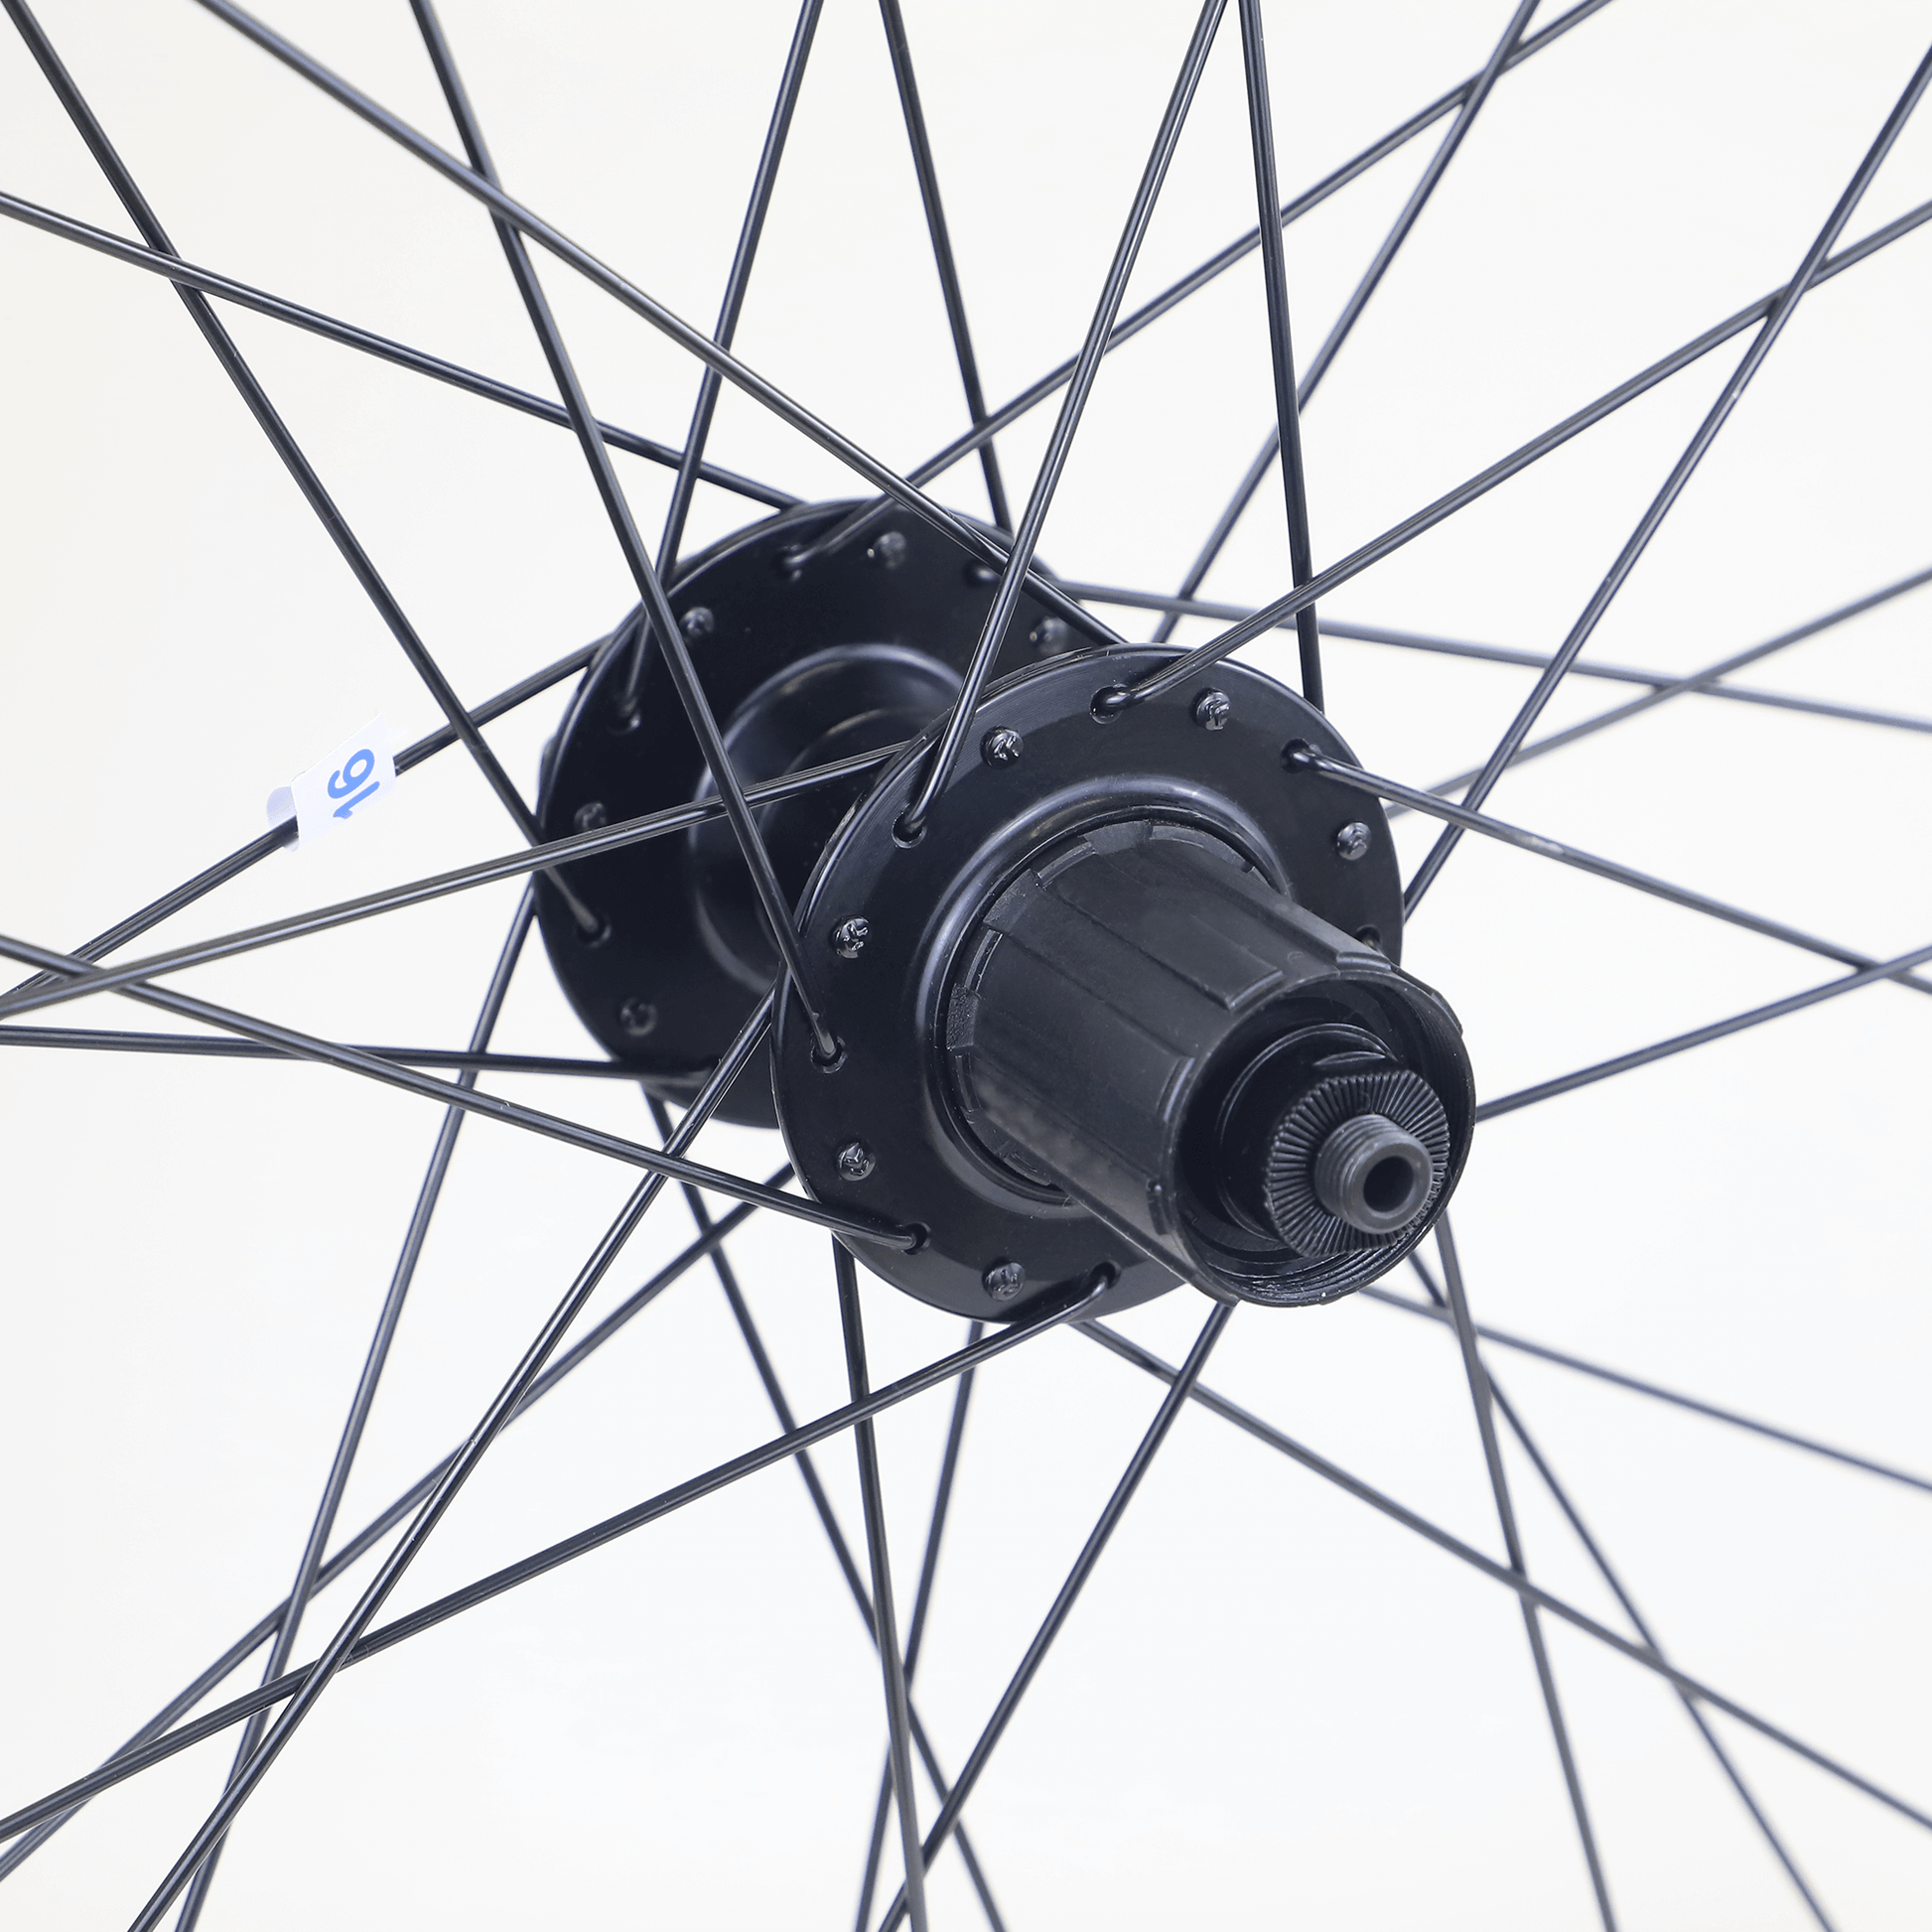 Zukka Hagen - 29“ Mountain Bike Wheelset